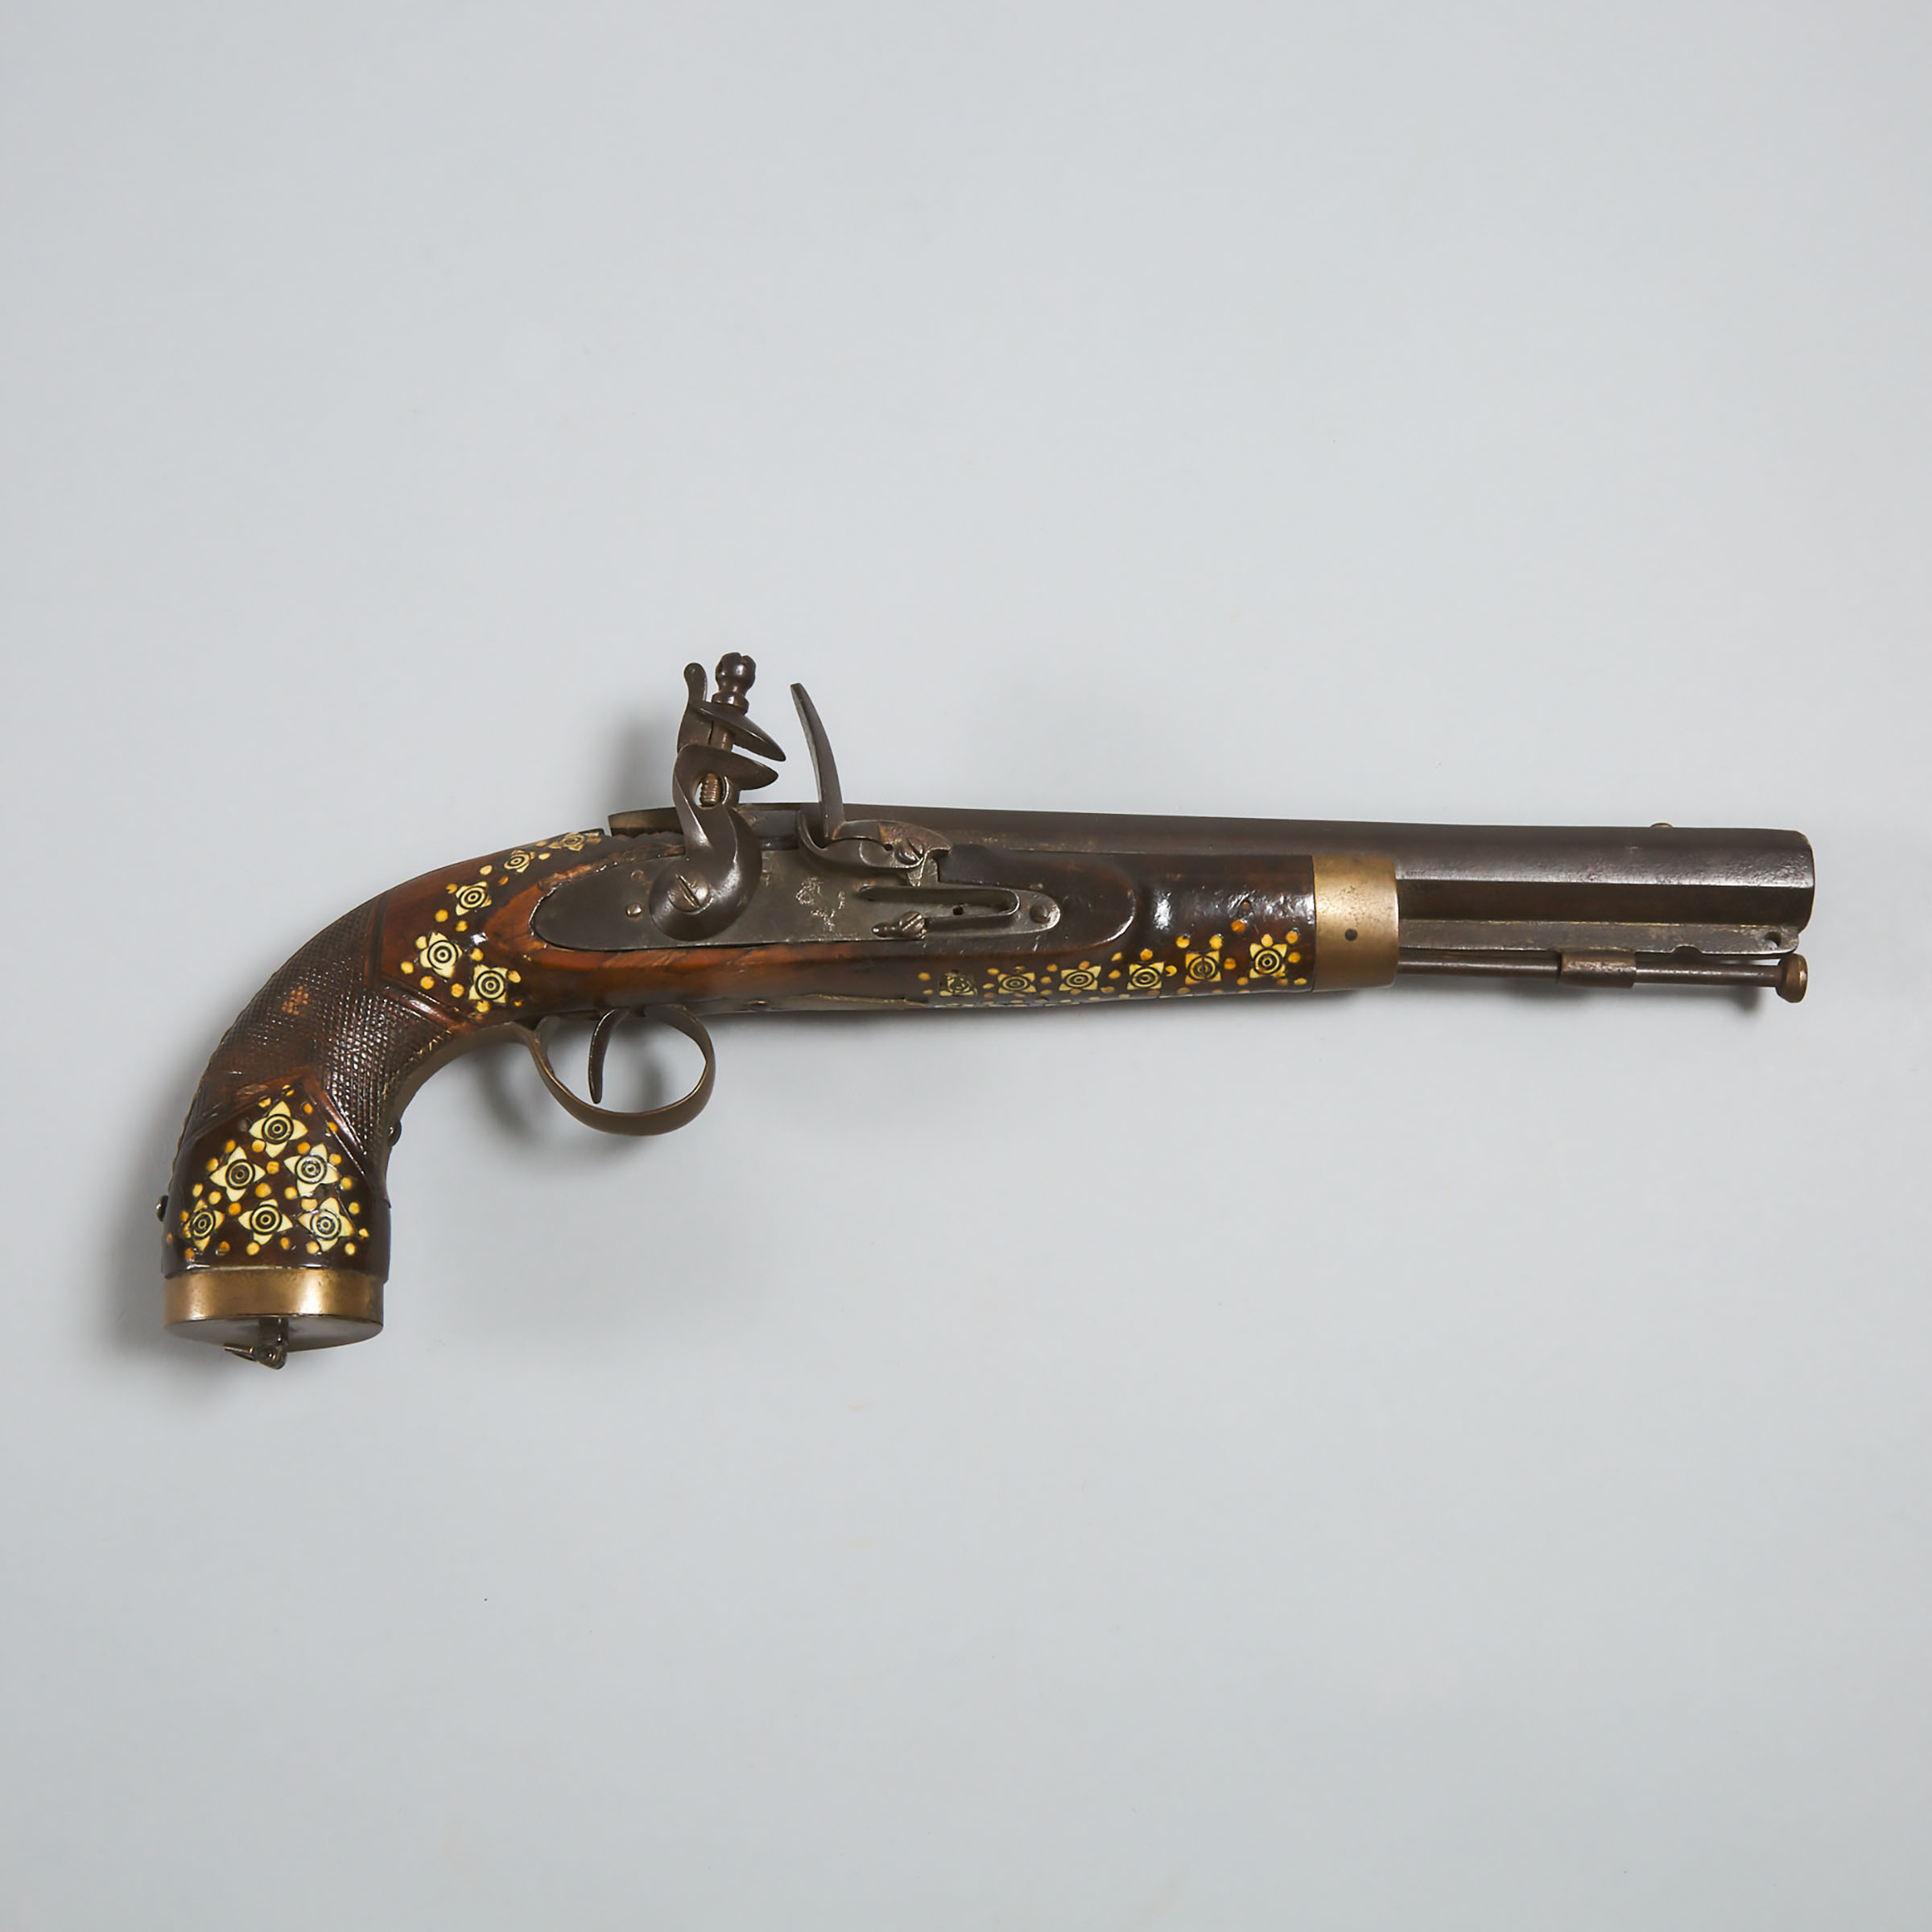 East India Company Flintlock Service Pistol, late 18th/early 19th century